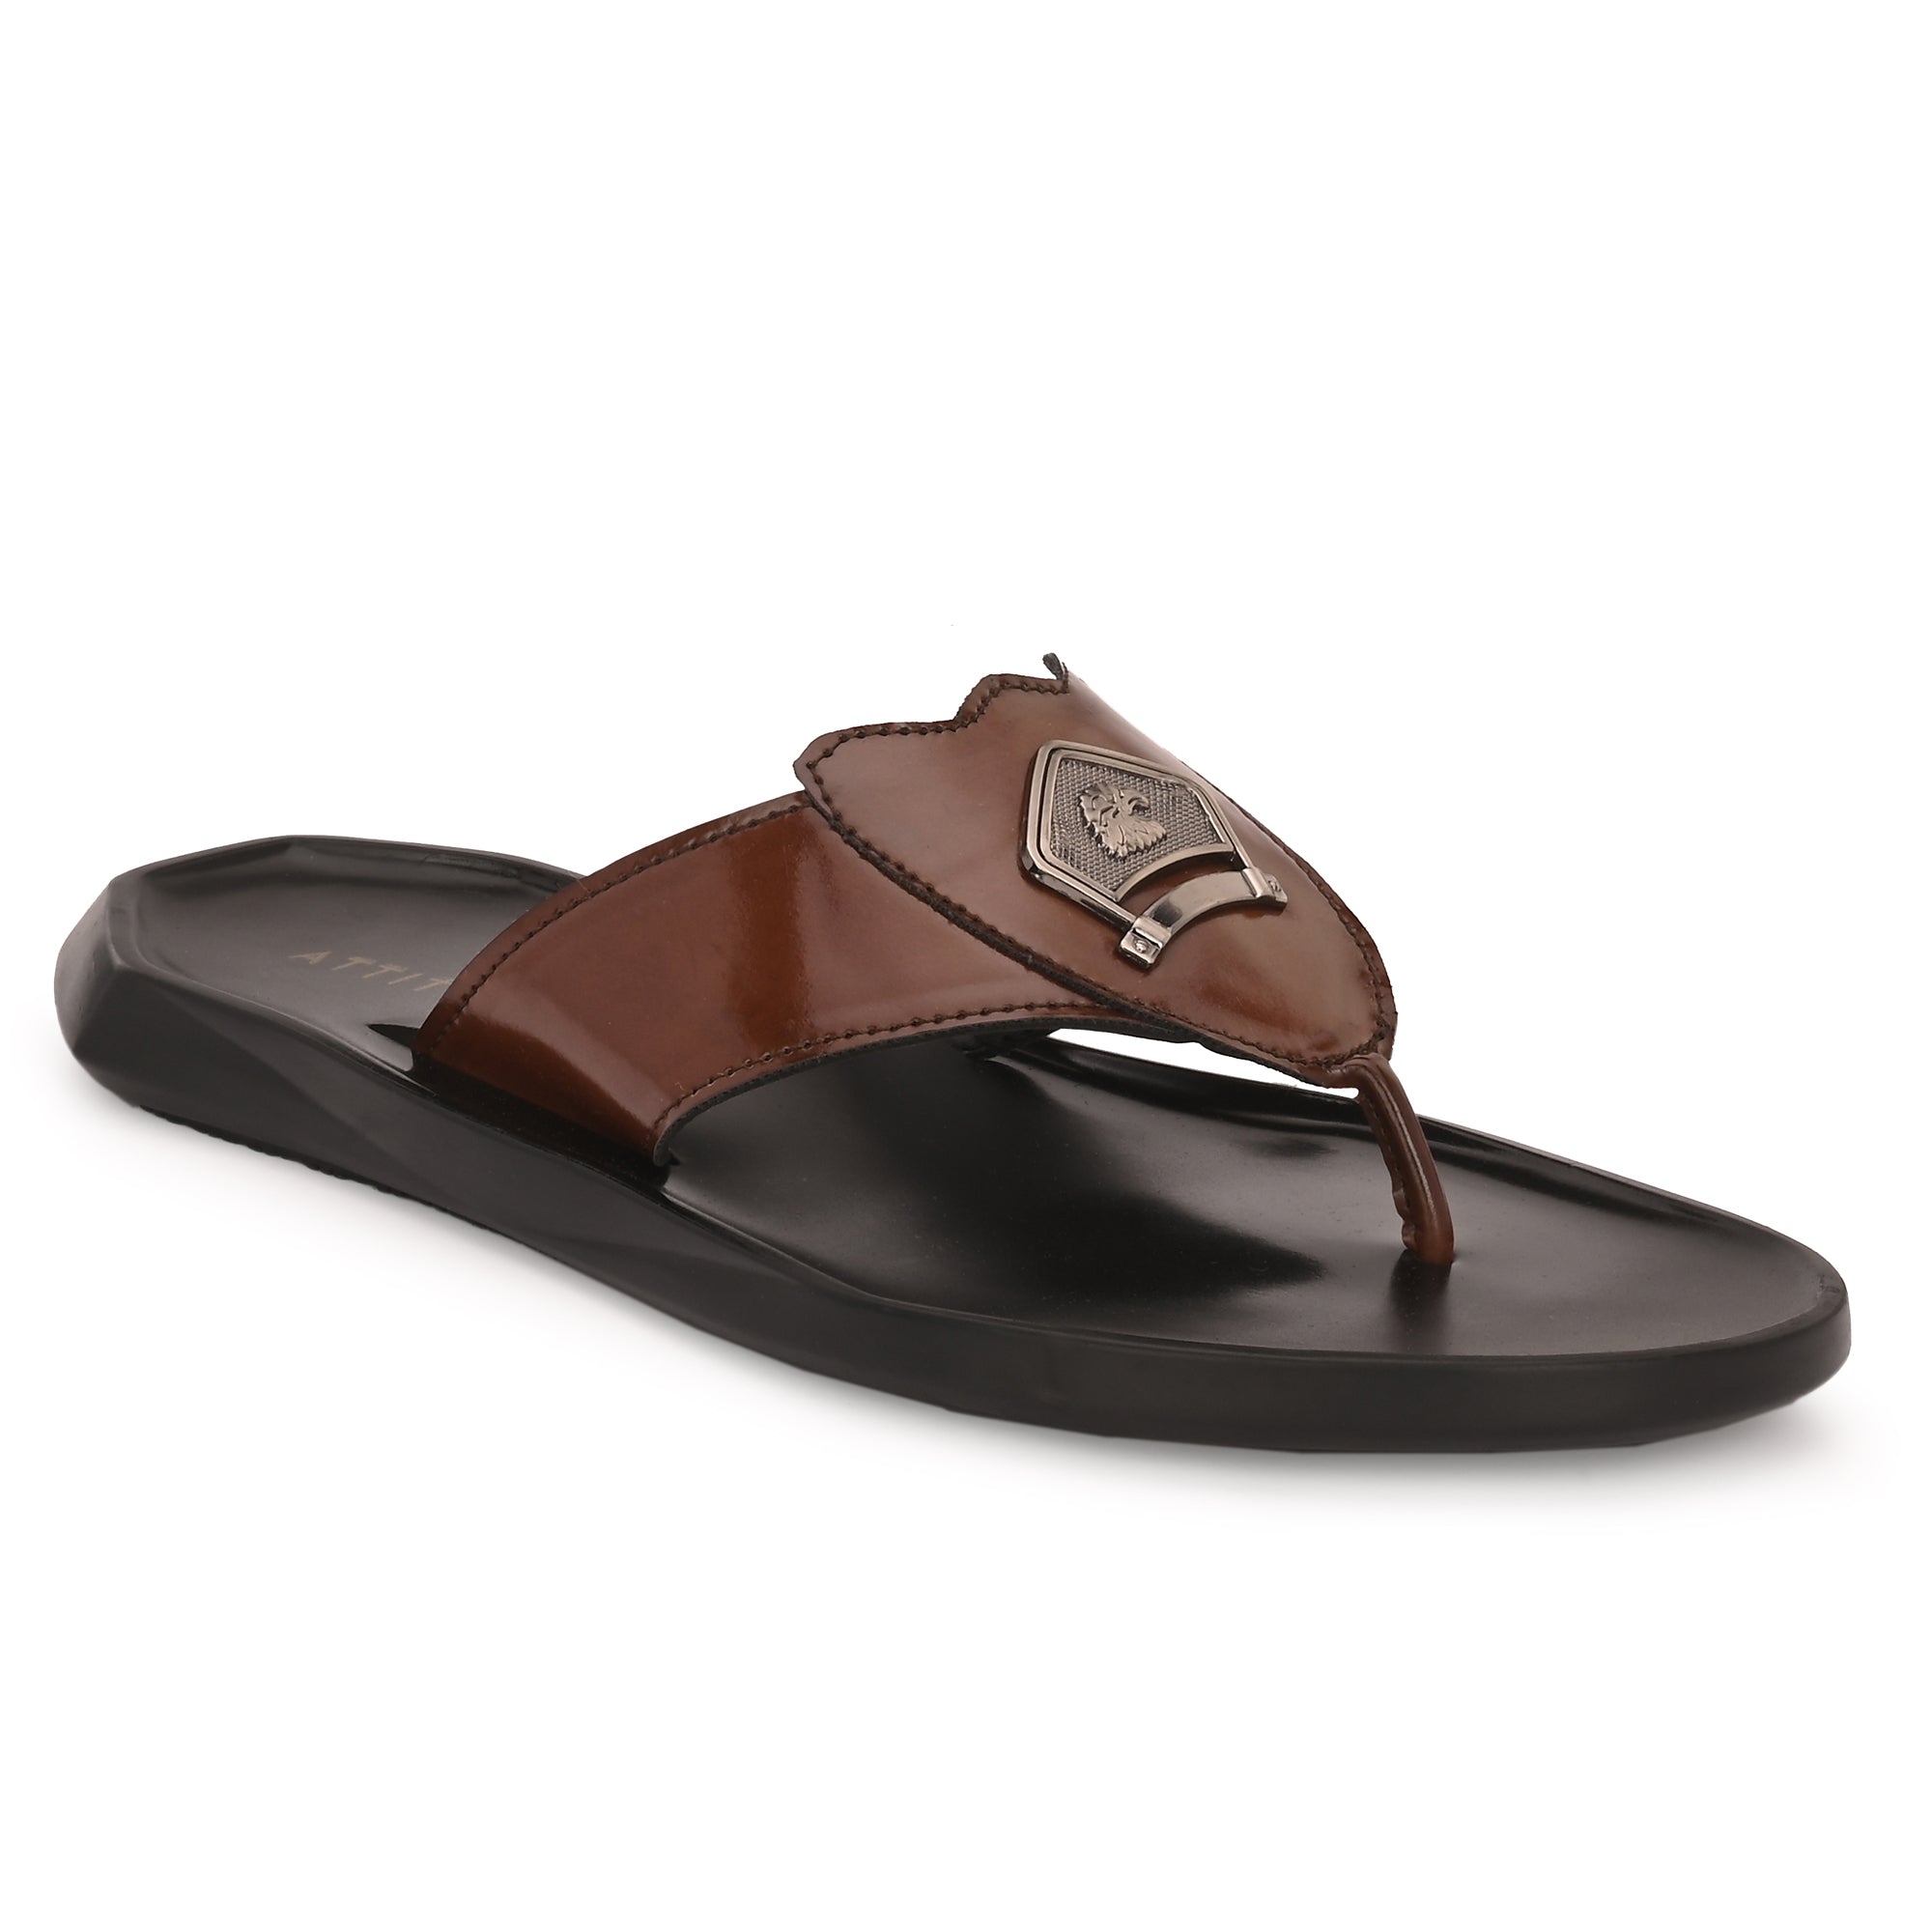 attitudist-brown-stylish-thong-slippers-for-men